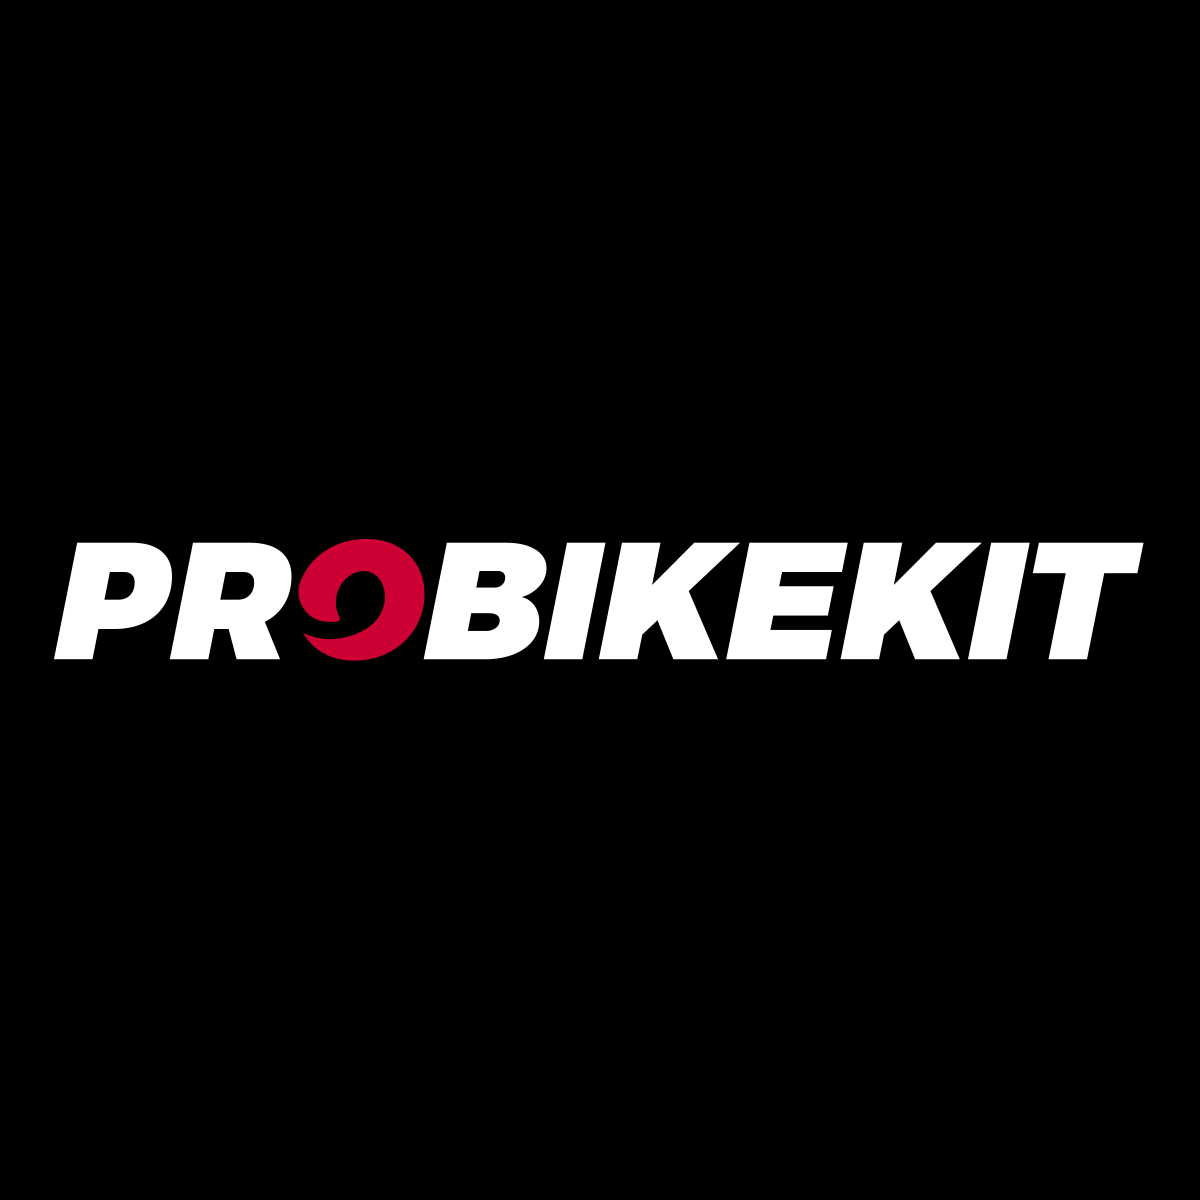 www.probikekit.com